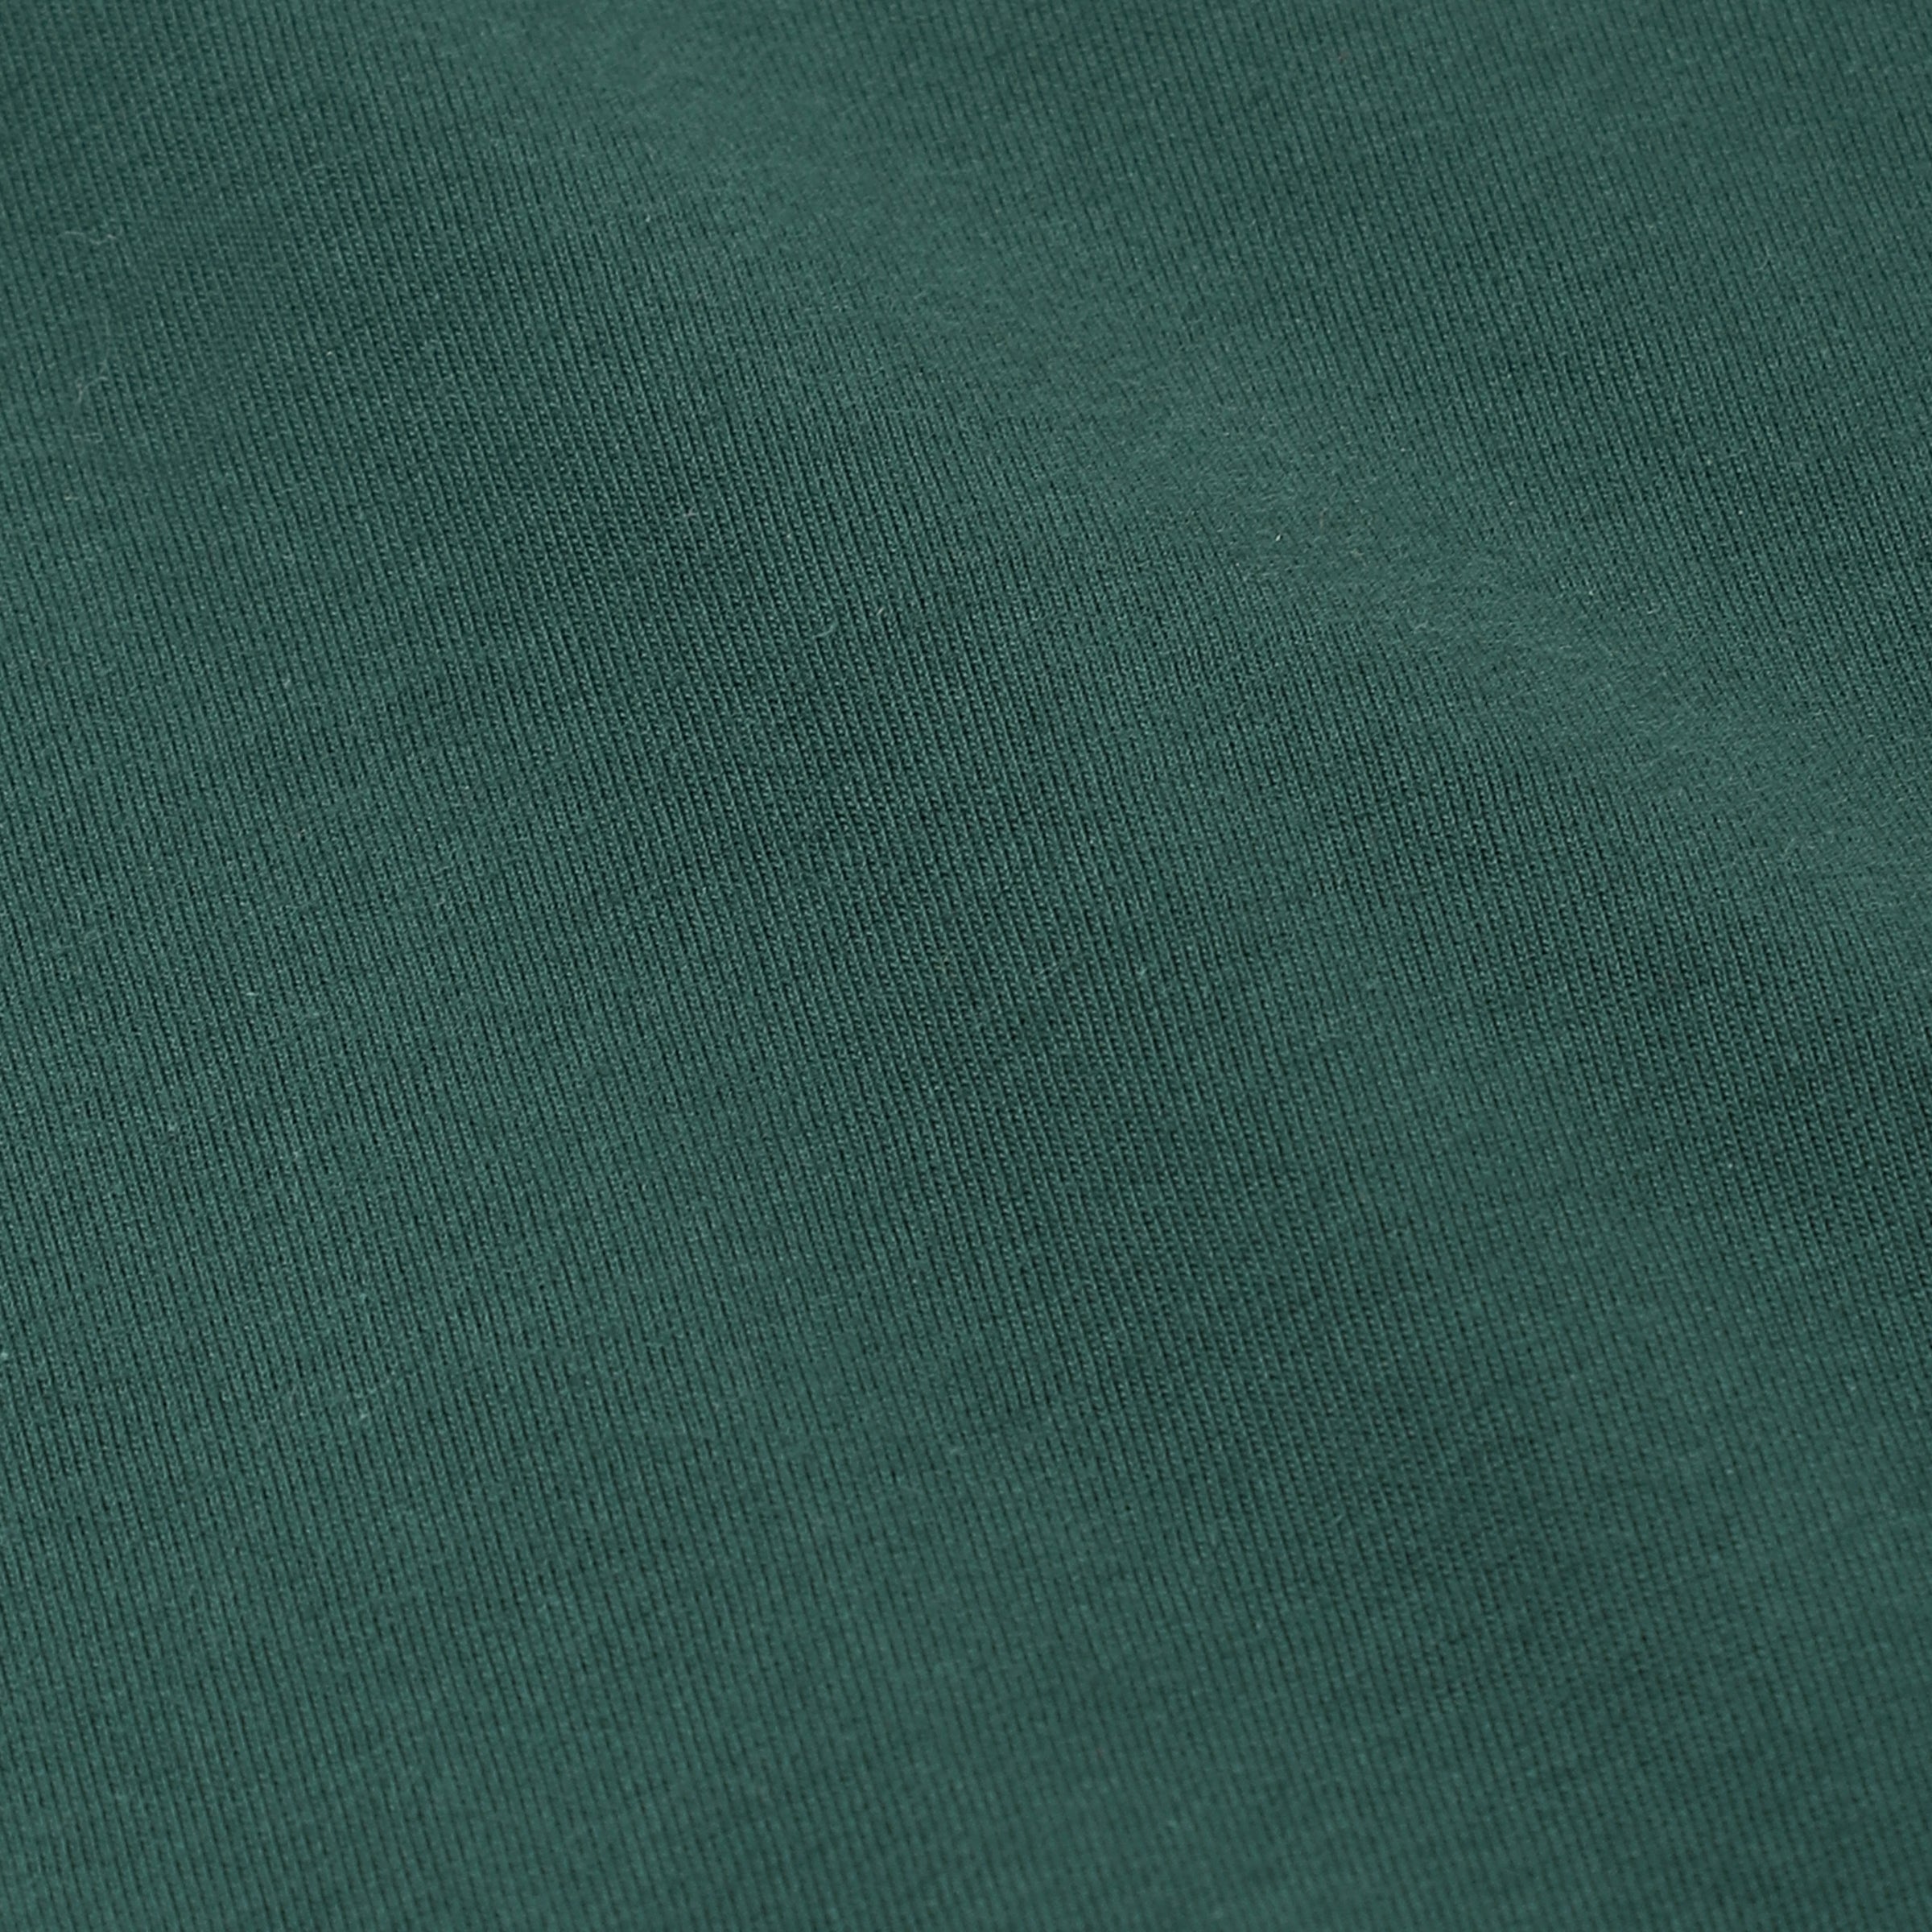 Supima Heavyweight Tee Field Green close up of fabric